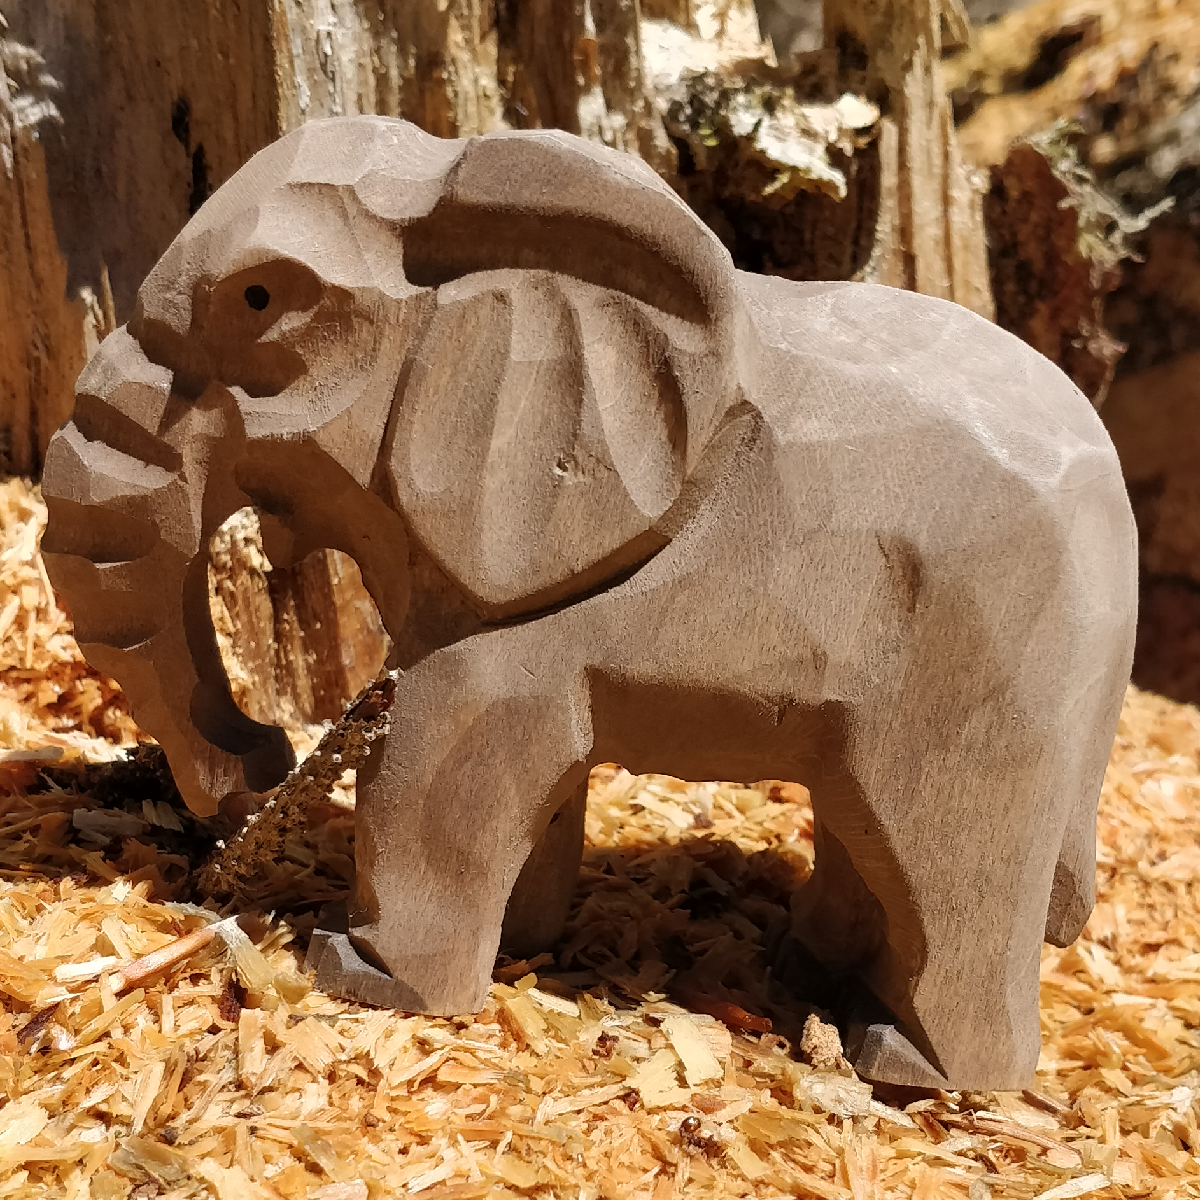 Wudimals® Wooden Elephant Calf Animal Toy